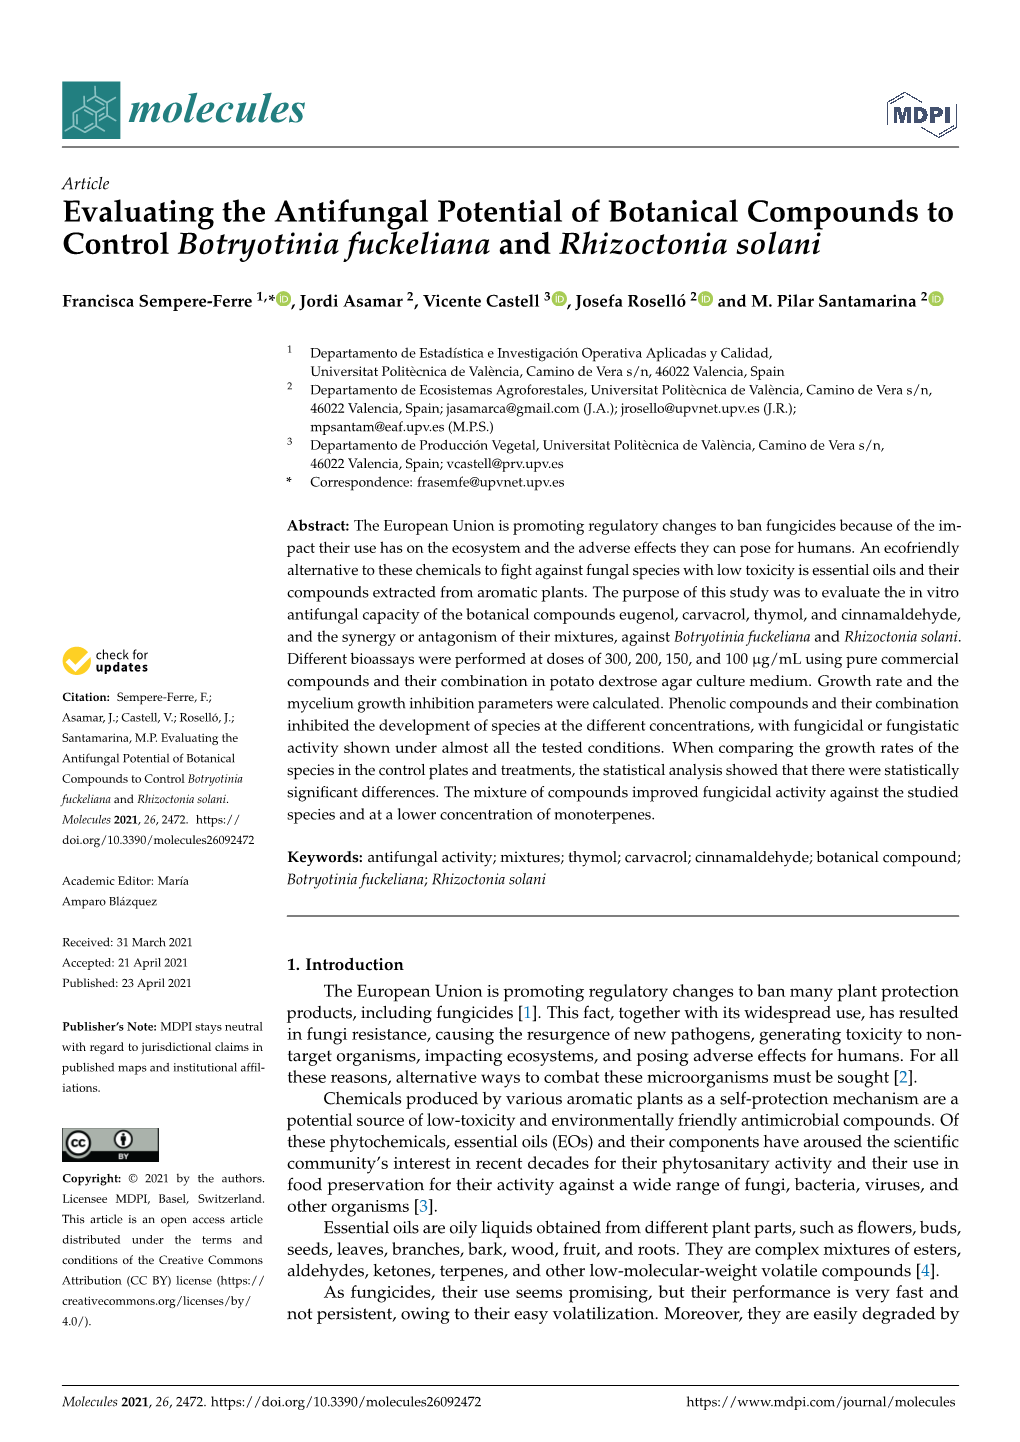 Evaluating the Antifungal Potential of Botanical Compounds to Control Botryotinia Fuckeliana and Rhizoctonia Solani